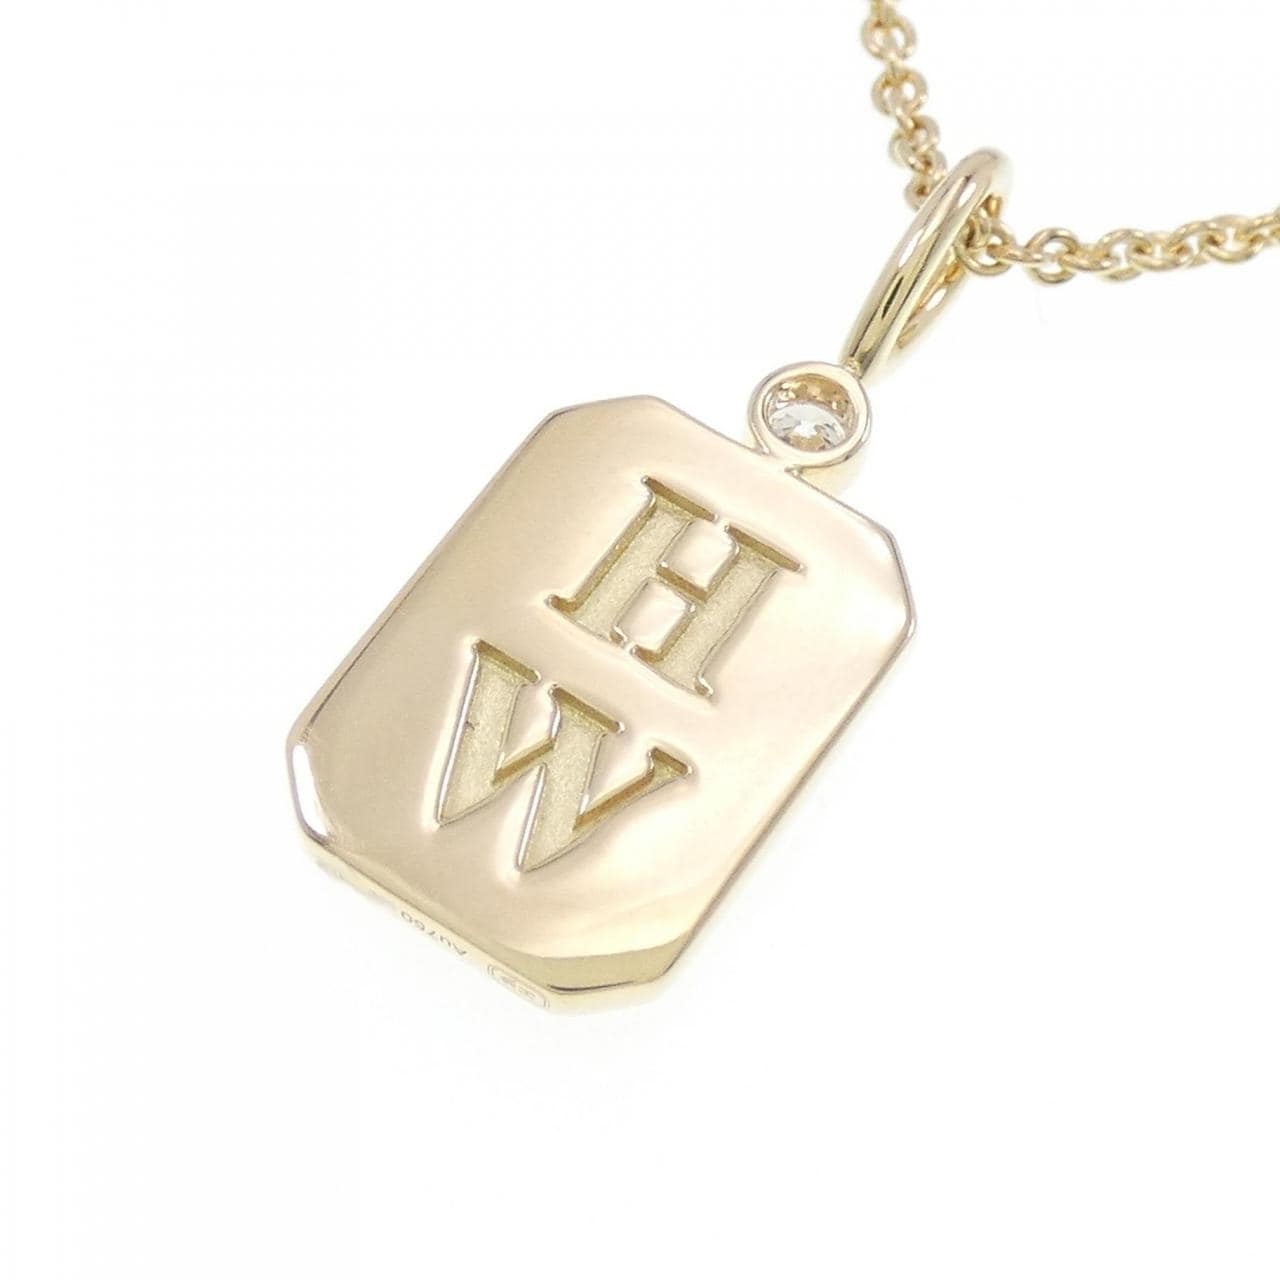 HARRY WINSTON HW logo necklace